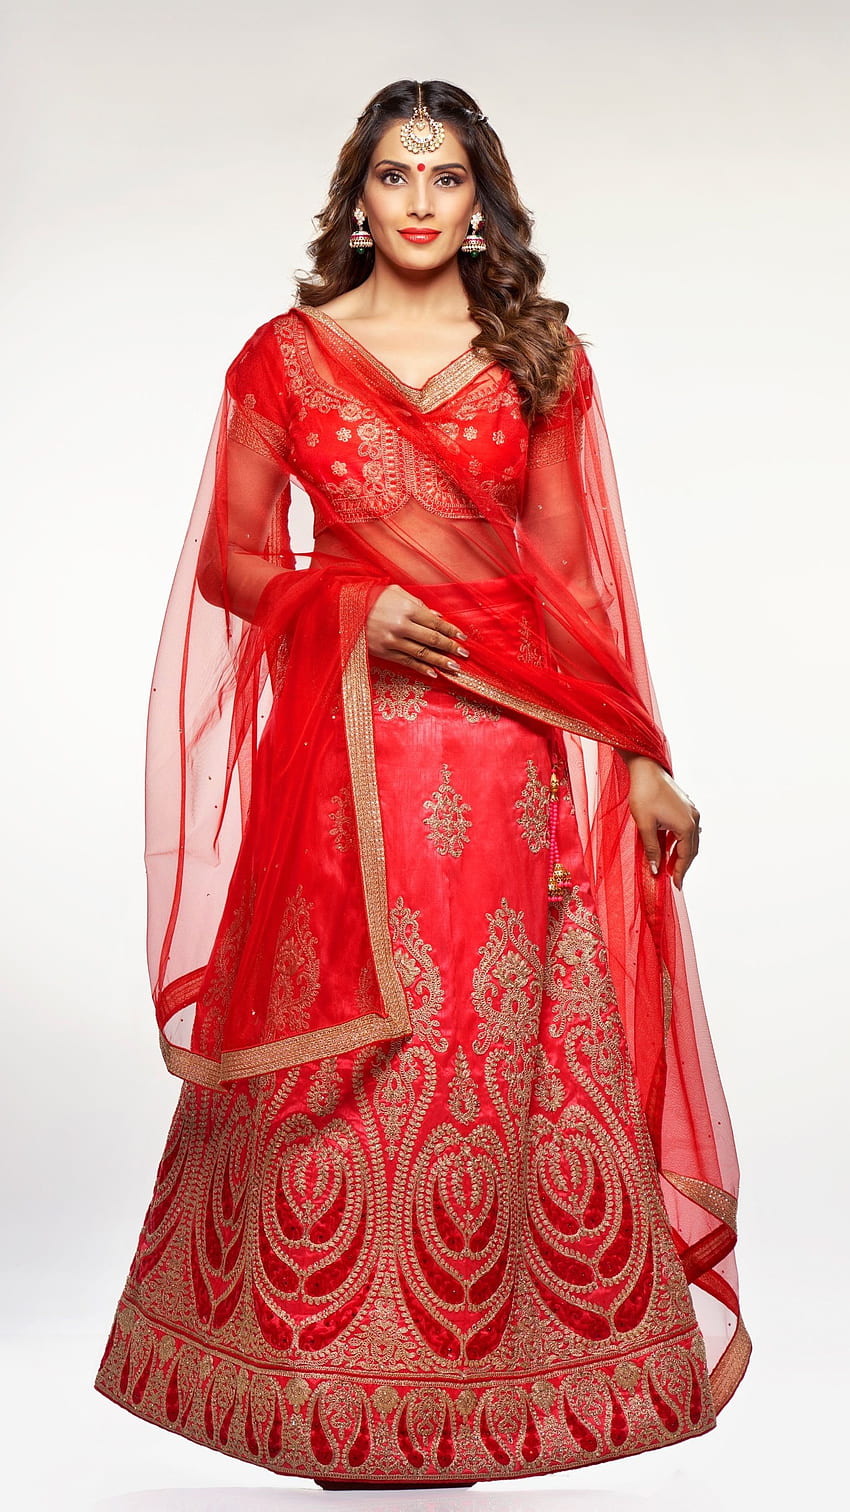 Actress Anjali Arora Beautiful Lehenga Dress | Hd wallpaper, Lehenga  collection, Wallpaper downloads